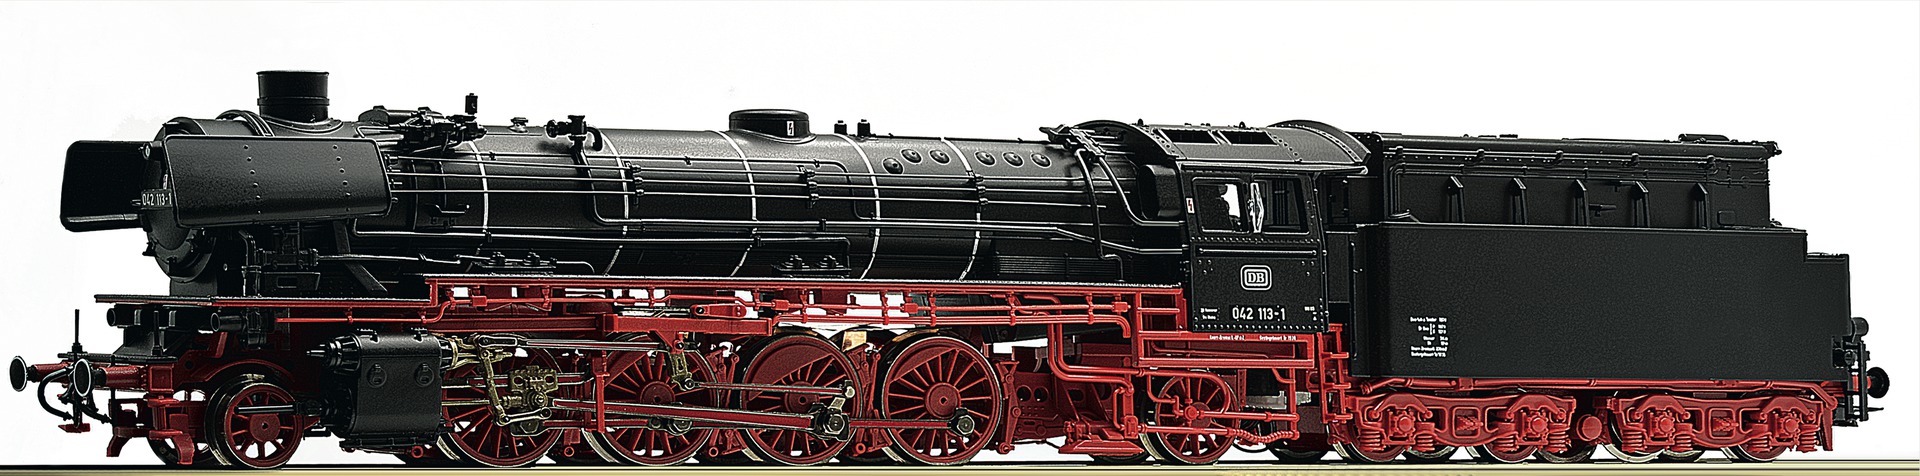 ROCO火车模型 042 of the DB蒸汽机车#62153